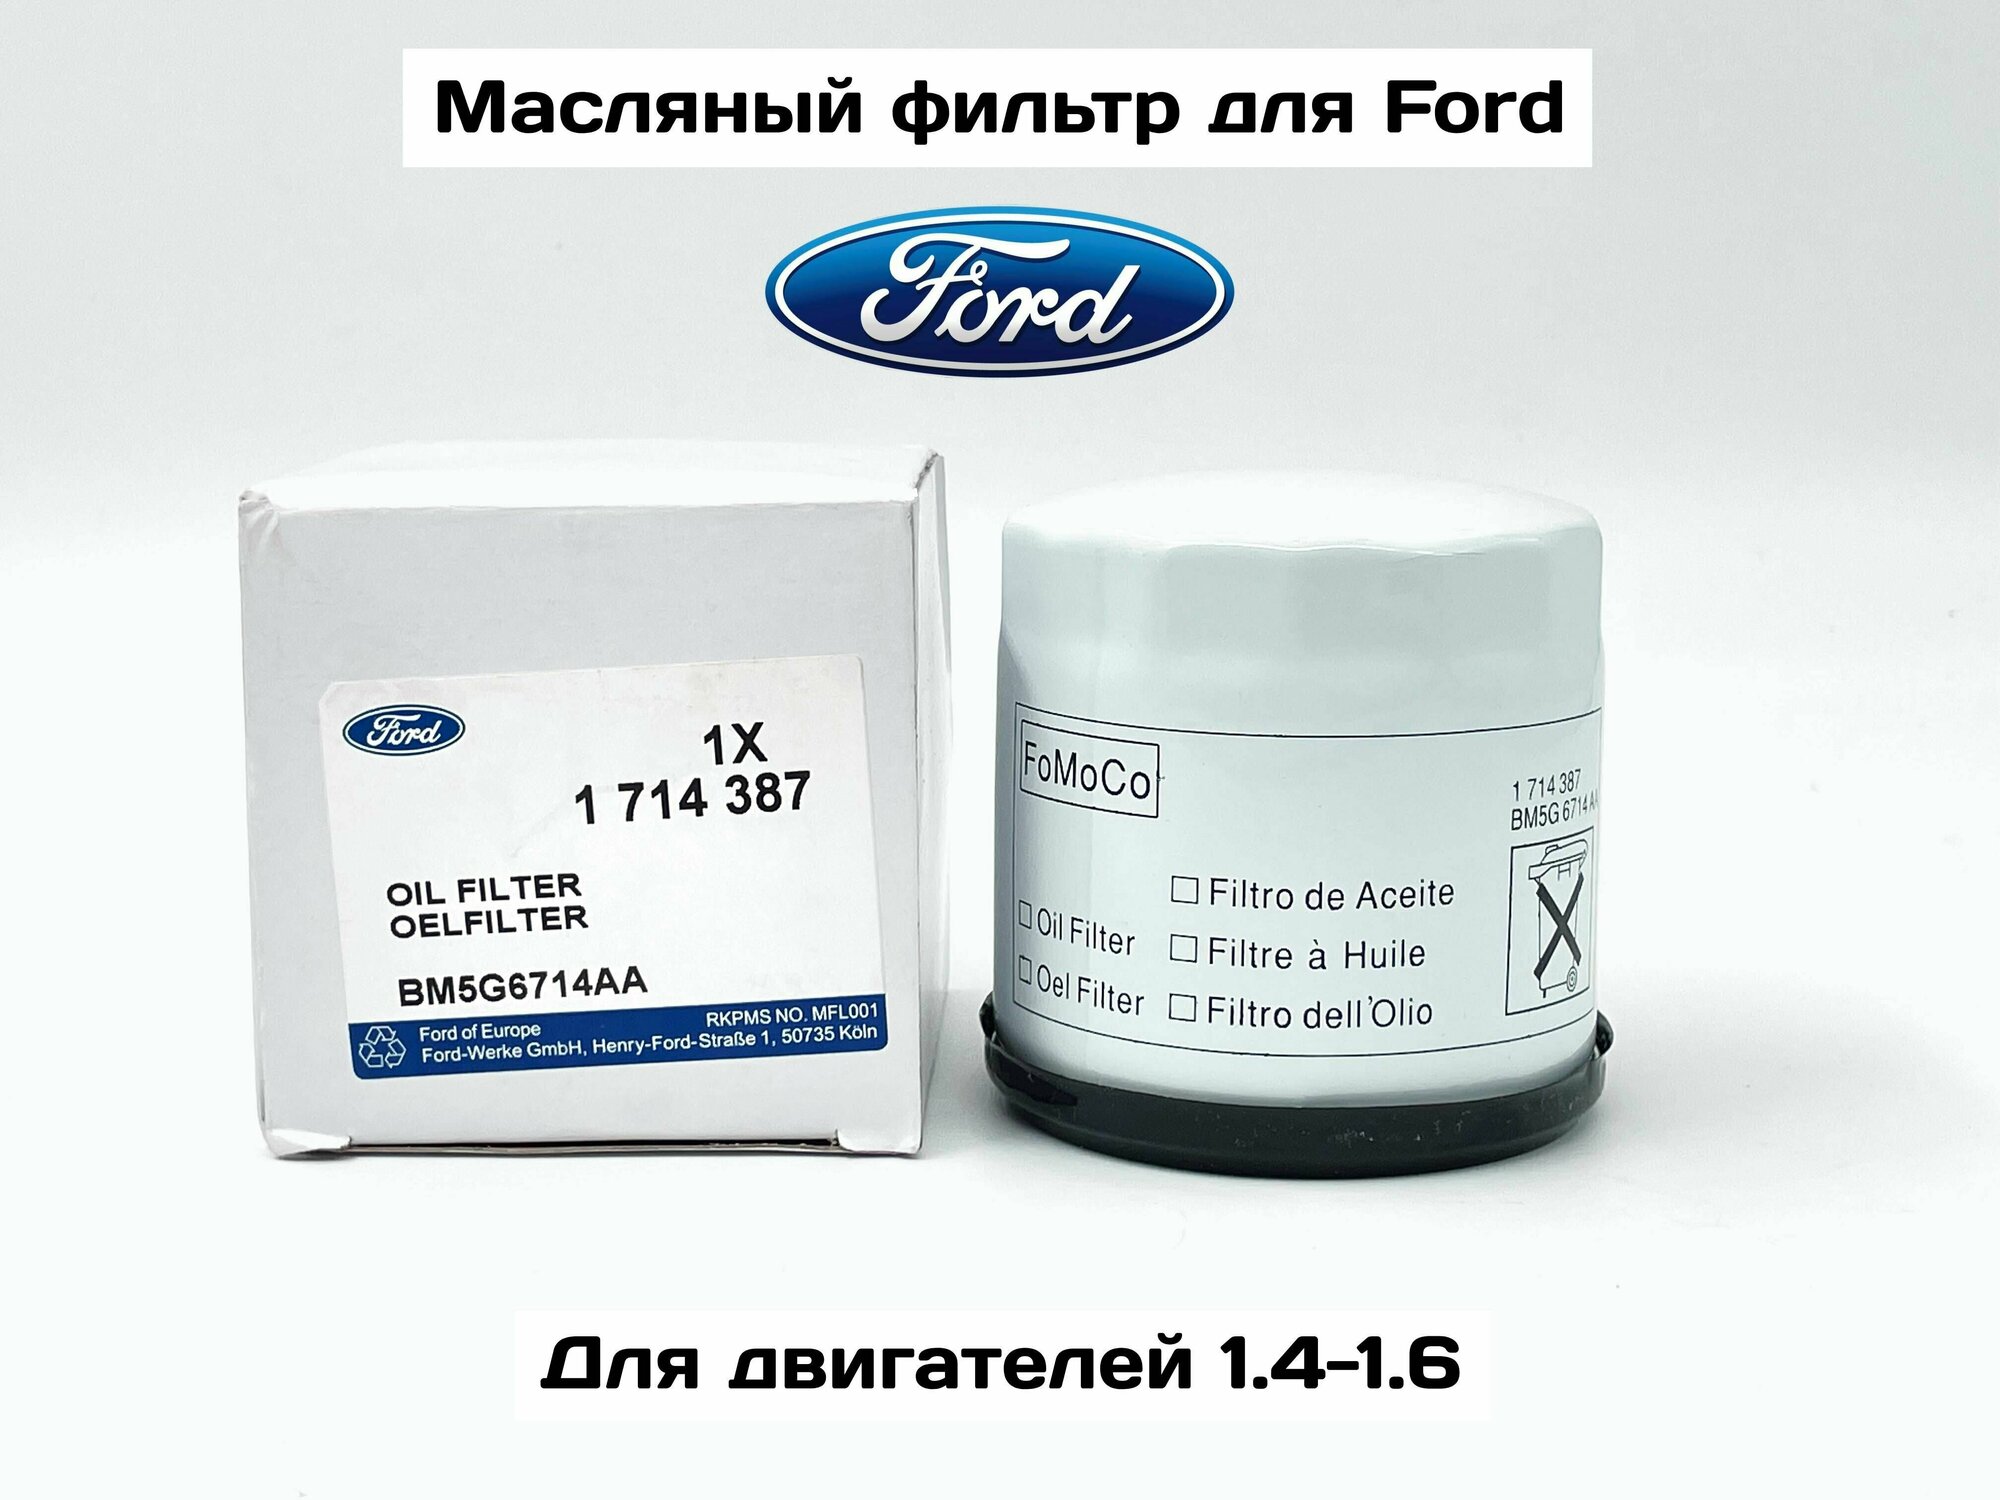 Фильтр масляный на Ford 1.4-1.6. Focus 2 / Focus 3 / Fusion / Mondeo 4 / Fiesta. Артикул 1714387